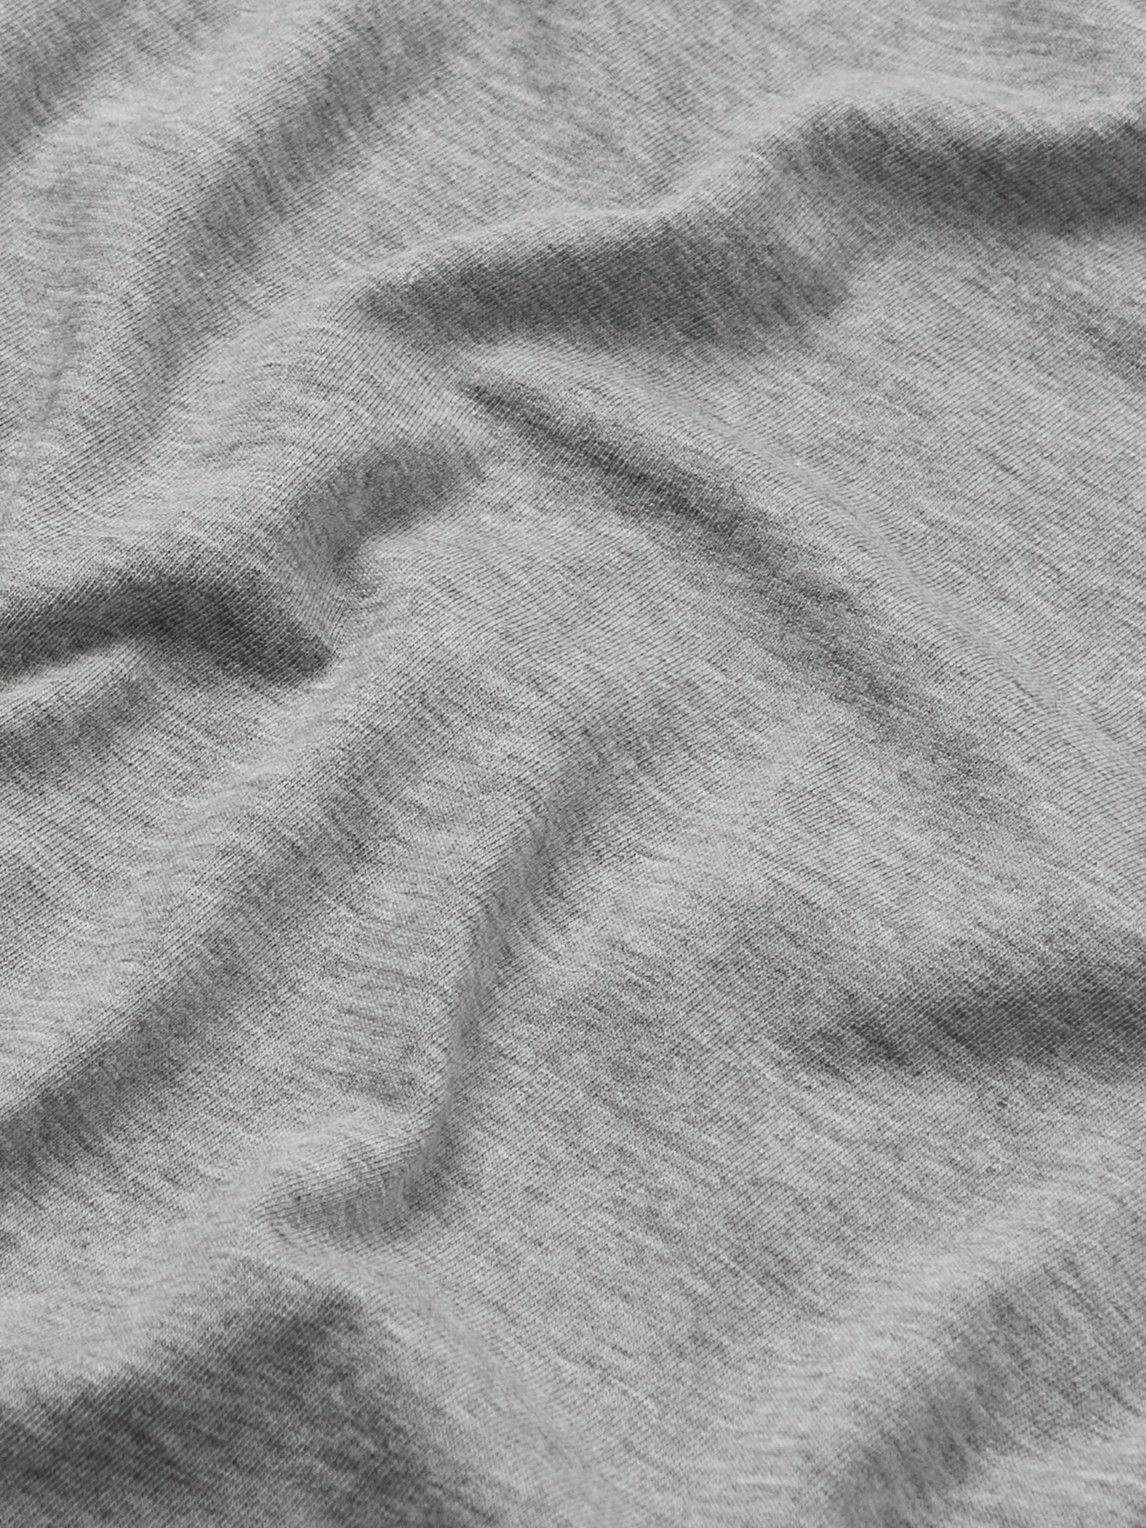 Stone Island - Logo-Appliquéd Cotton-Jersey T-Shirt - Gray Stone Island